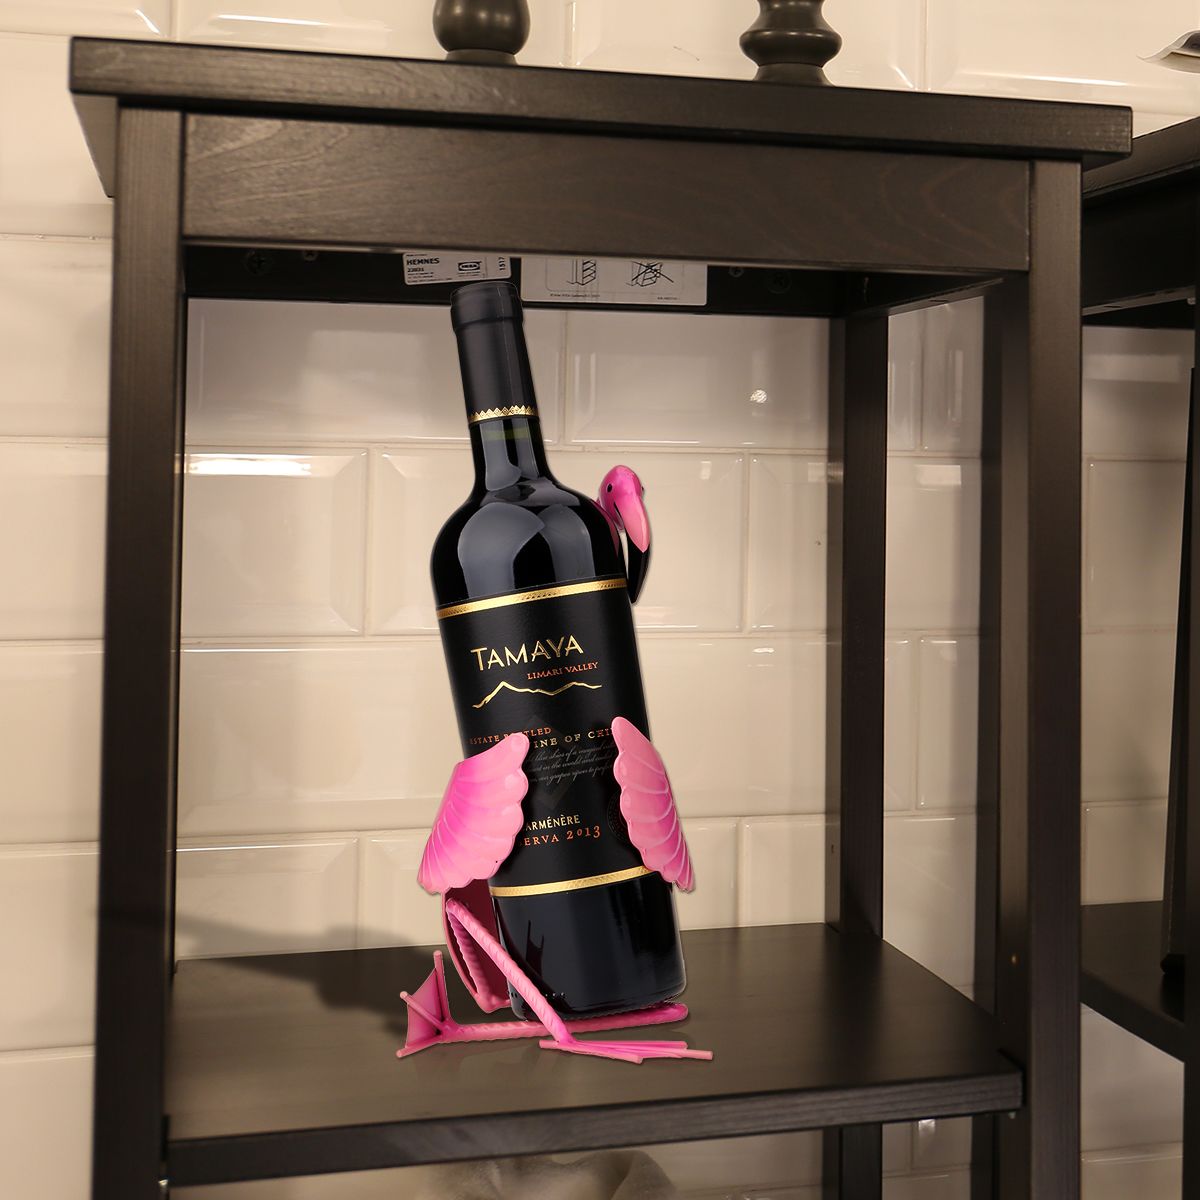 a bottle of wine sitting on top of a shelf